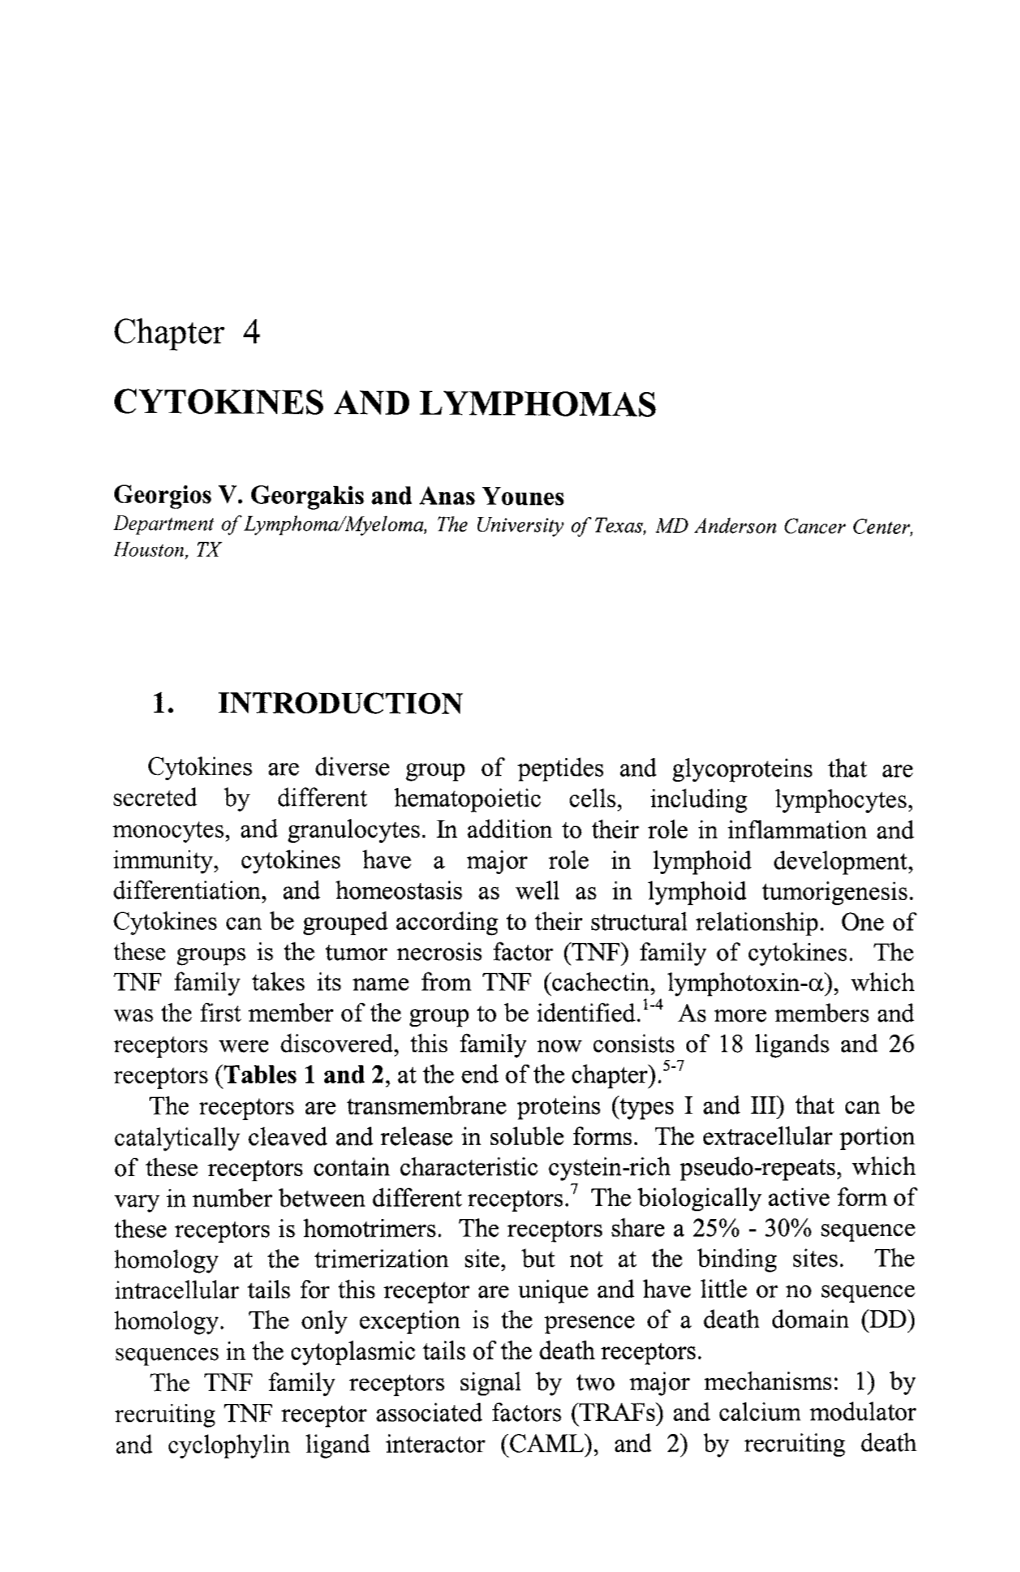 Chapter 4 CYTOKINES and LYMPHOMAS